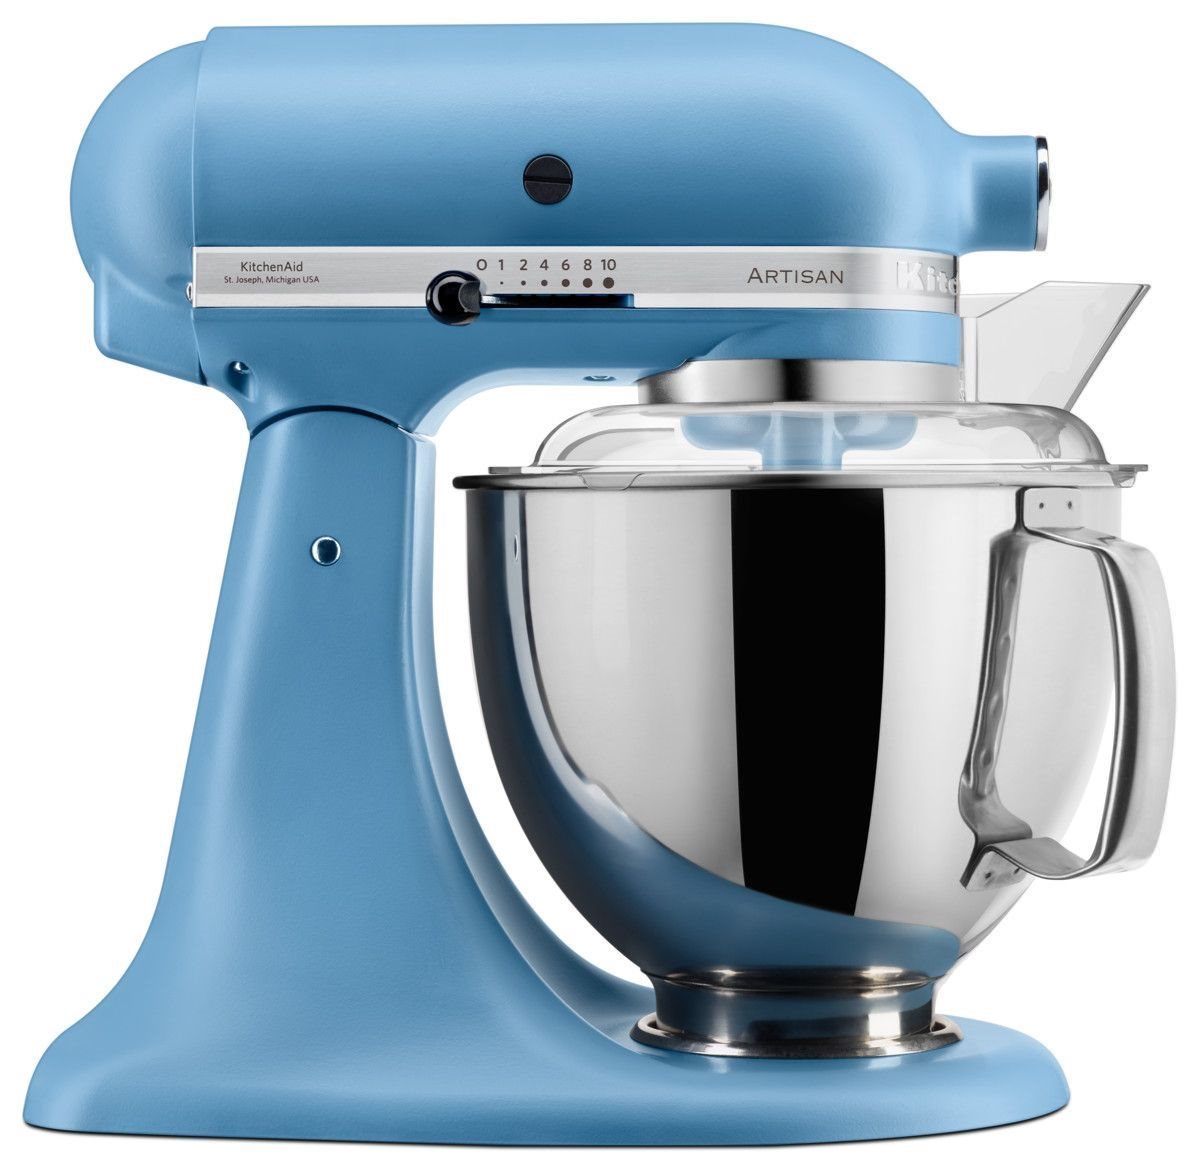 tredobbelt Springe Nysgerrighed Artisan" Mixer, 4.8L, Model 175, "Blue Velvet" color - KitchenAid brand |  KitchenShop